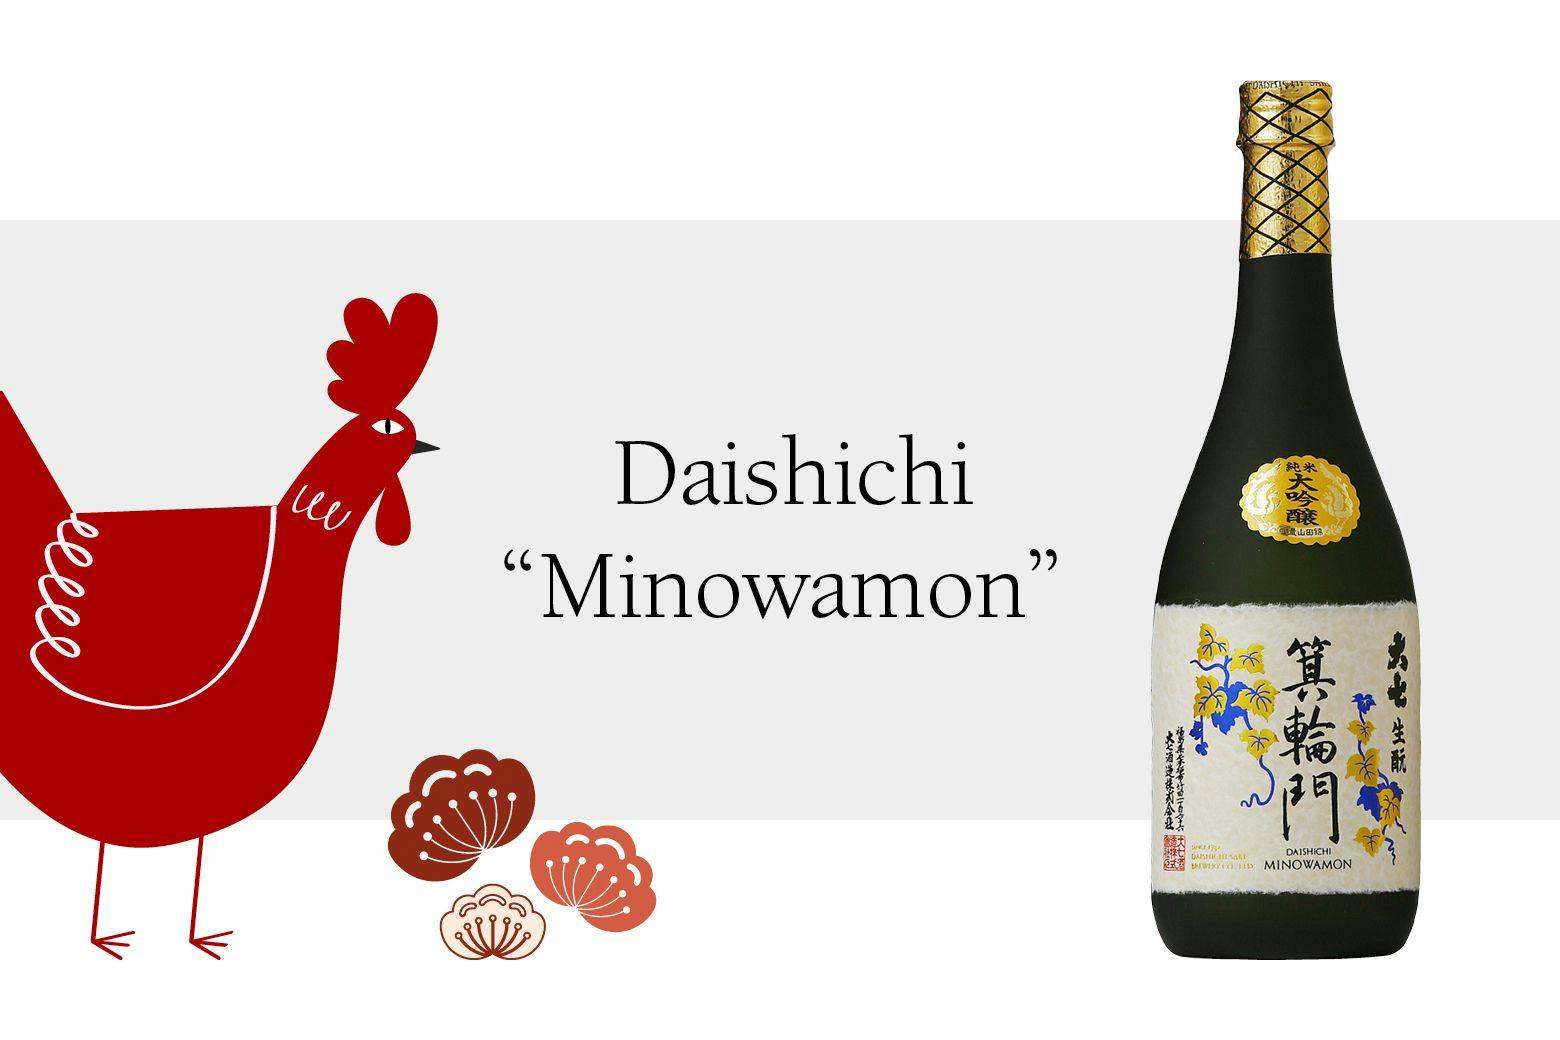 Daishichi “Minowamon” with Chinese zodiac Rooster